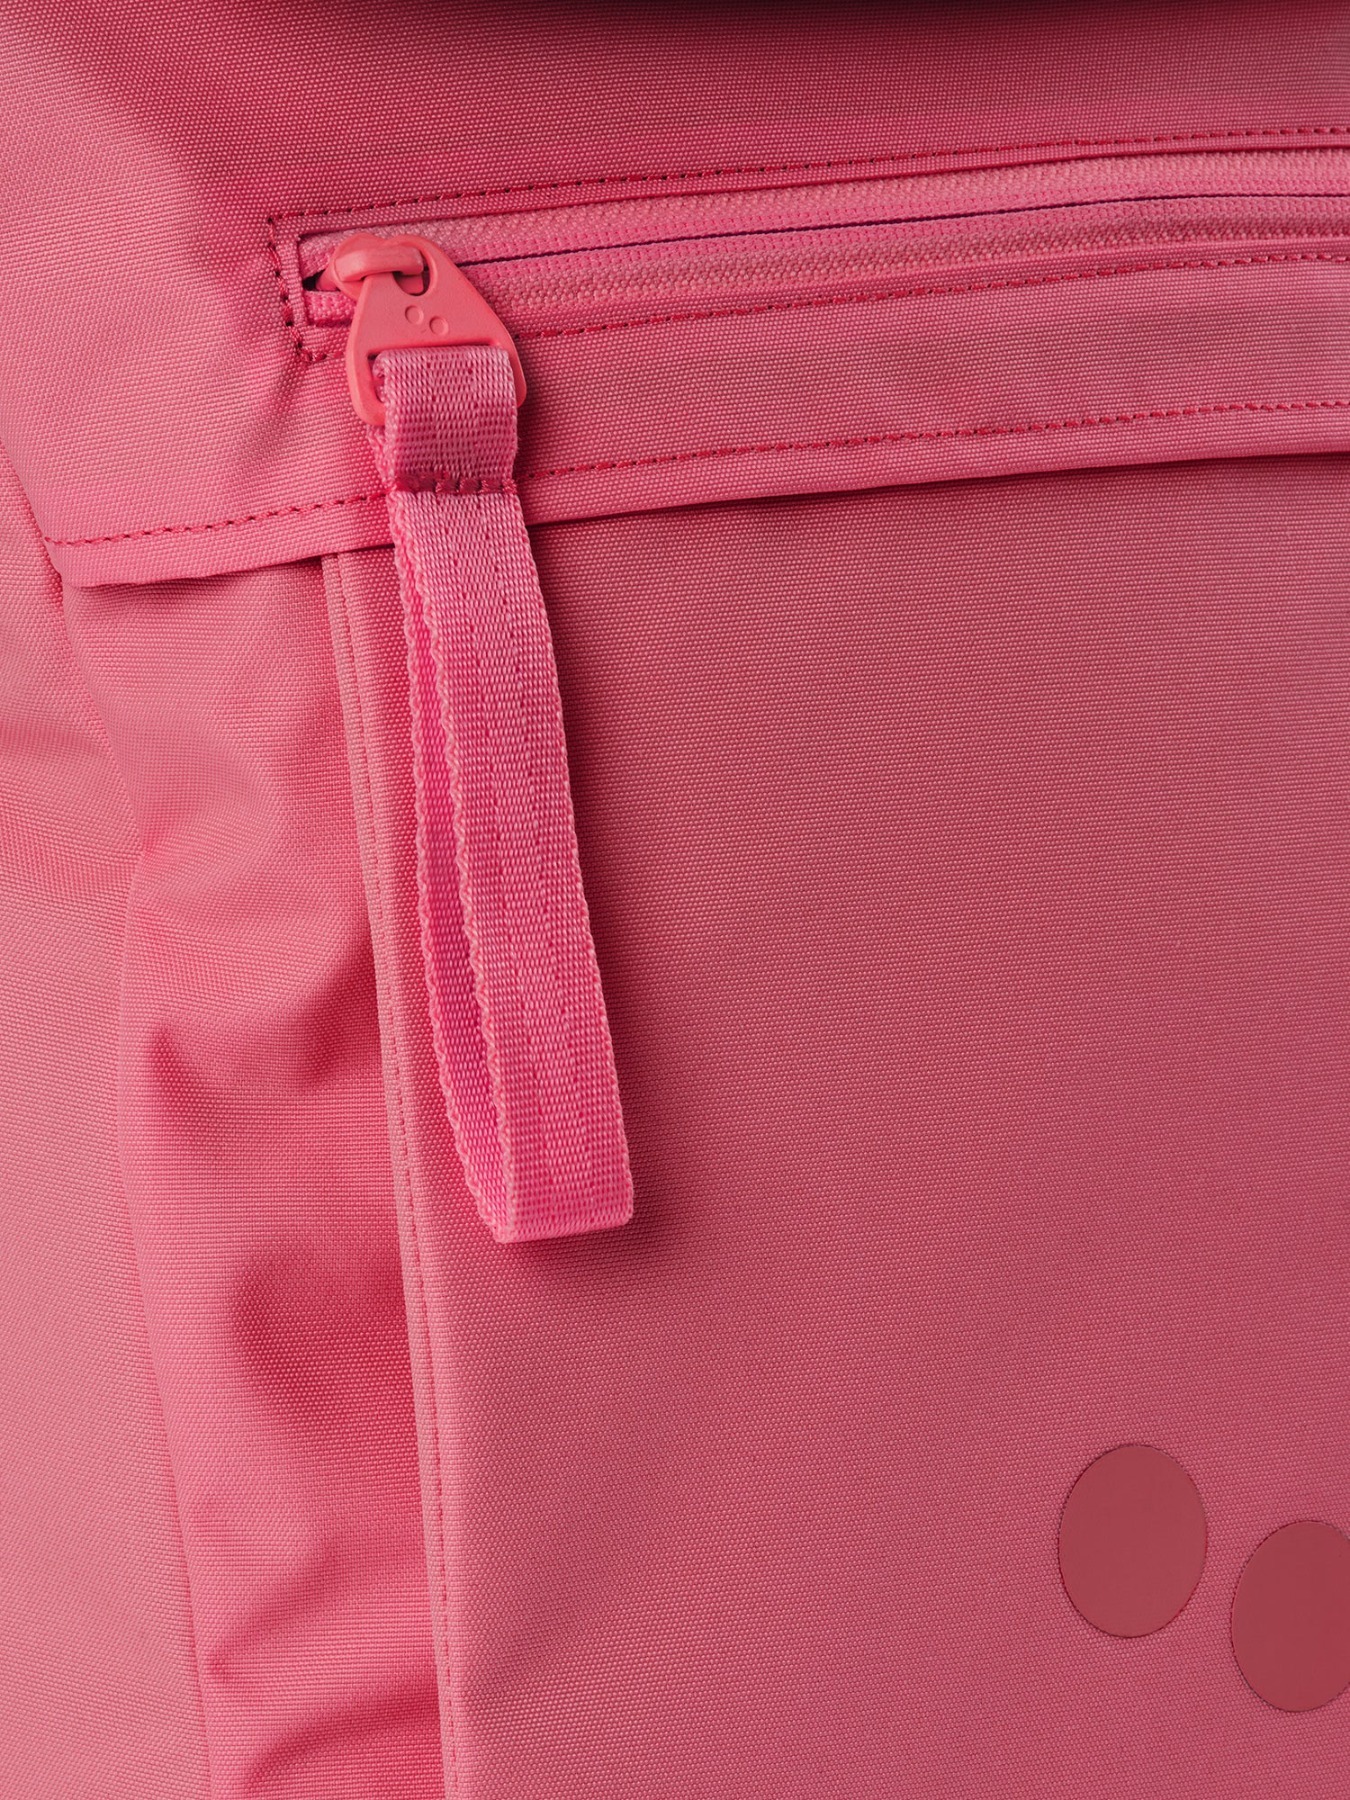 pinqponq Backpack KLAK - Watermelon Pink 6